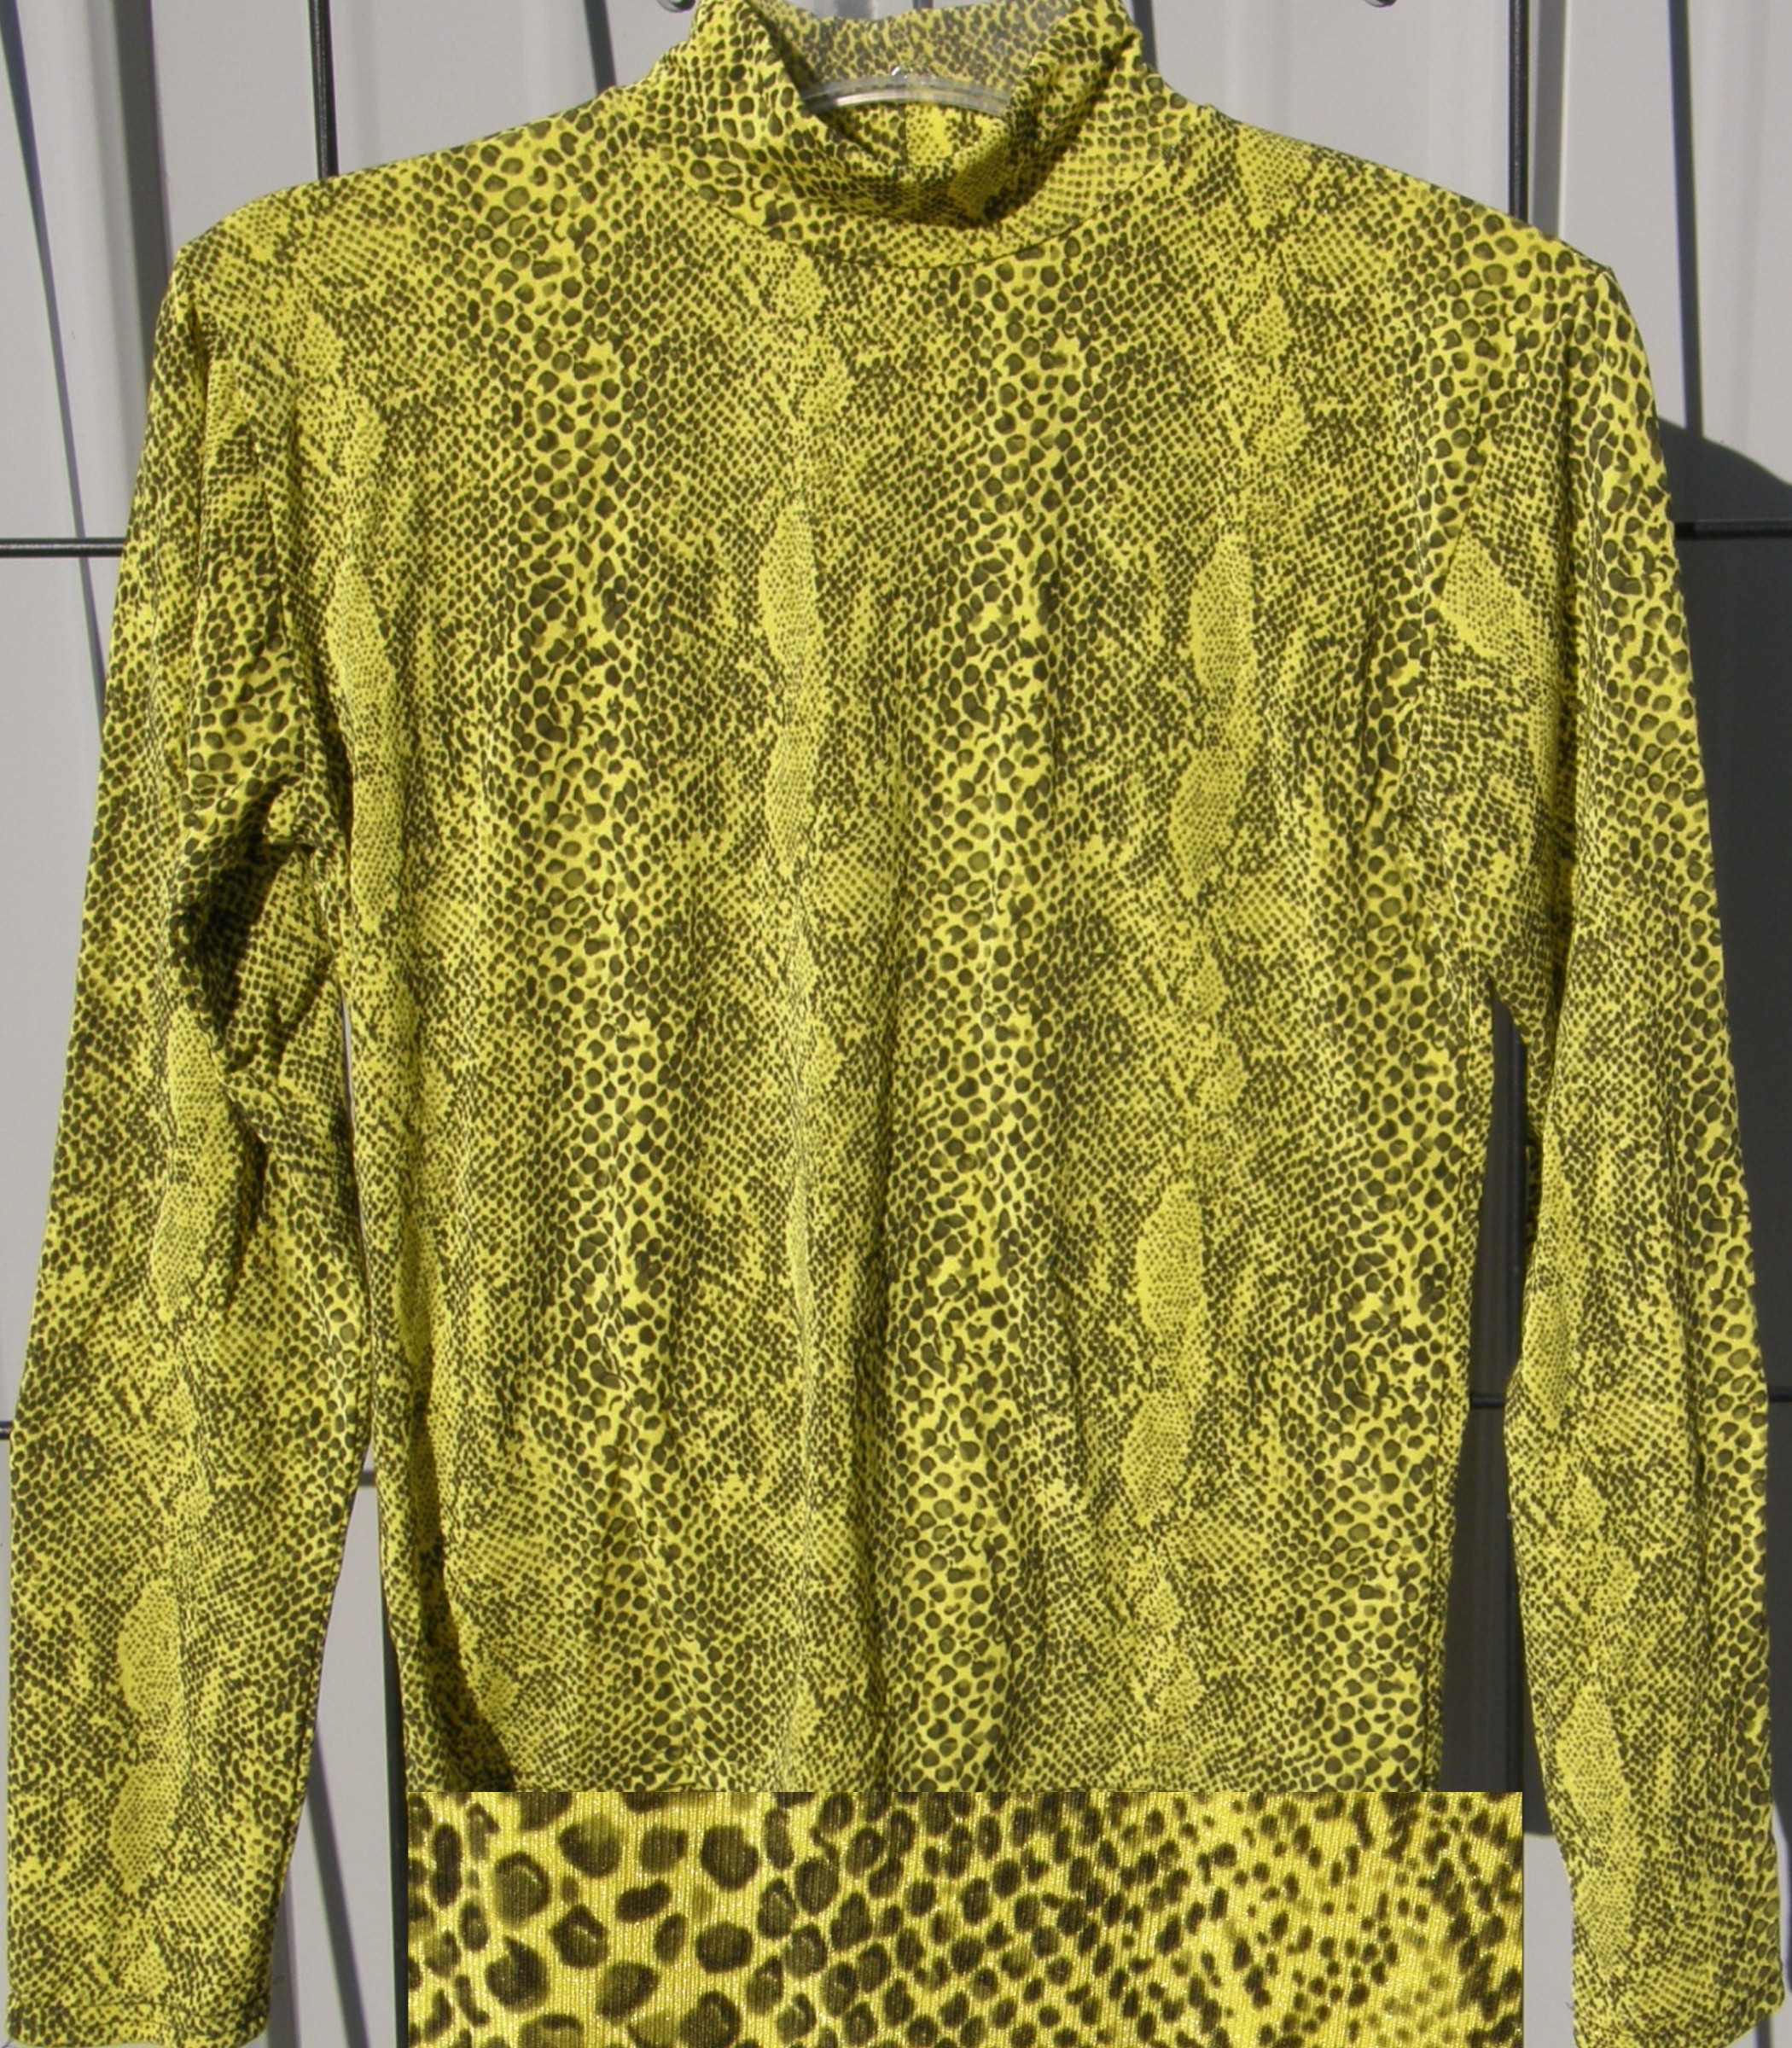 FTWW Slinky Top Western Show Shirt Yellow Snakeskin Print Yellow Python Print Ladies L